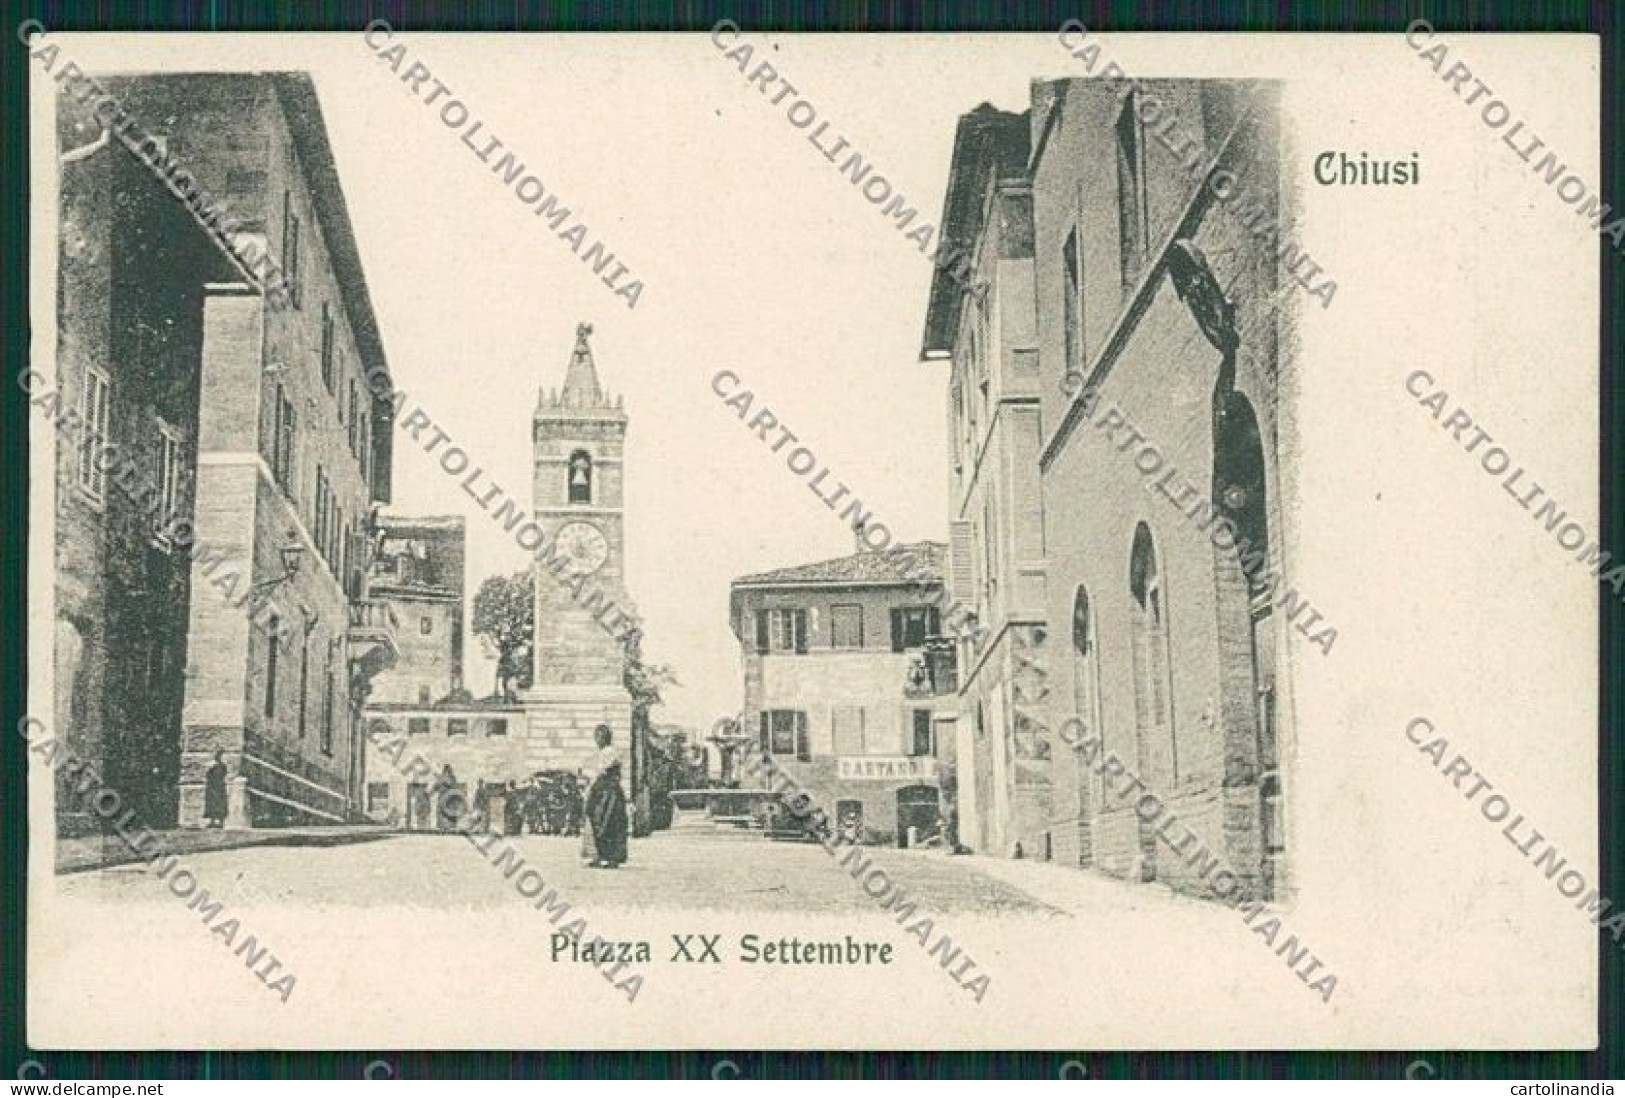 Siena Chiusi Cartolina QQ1830 - Siena